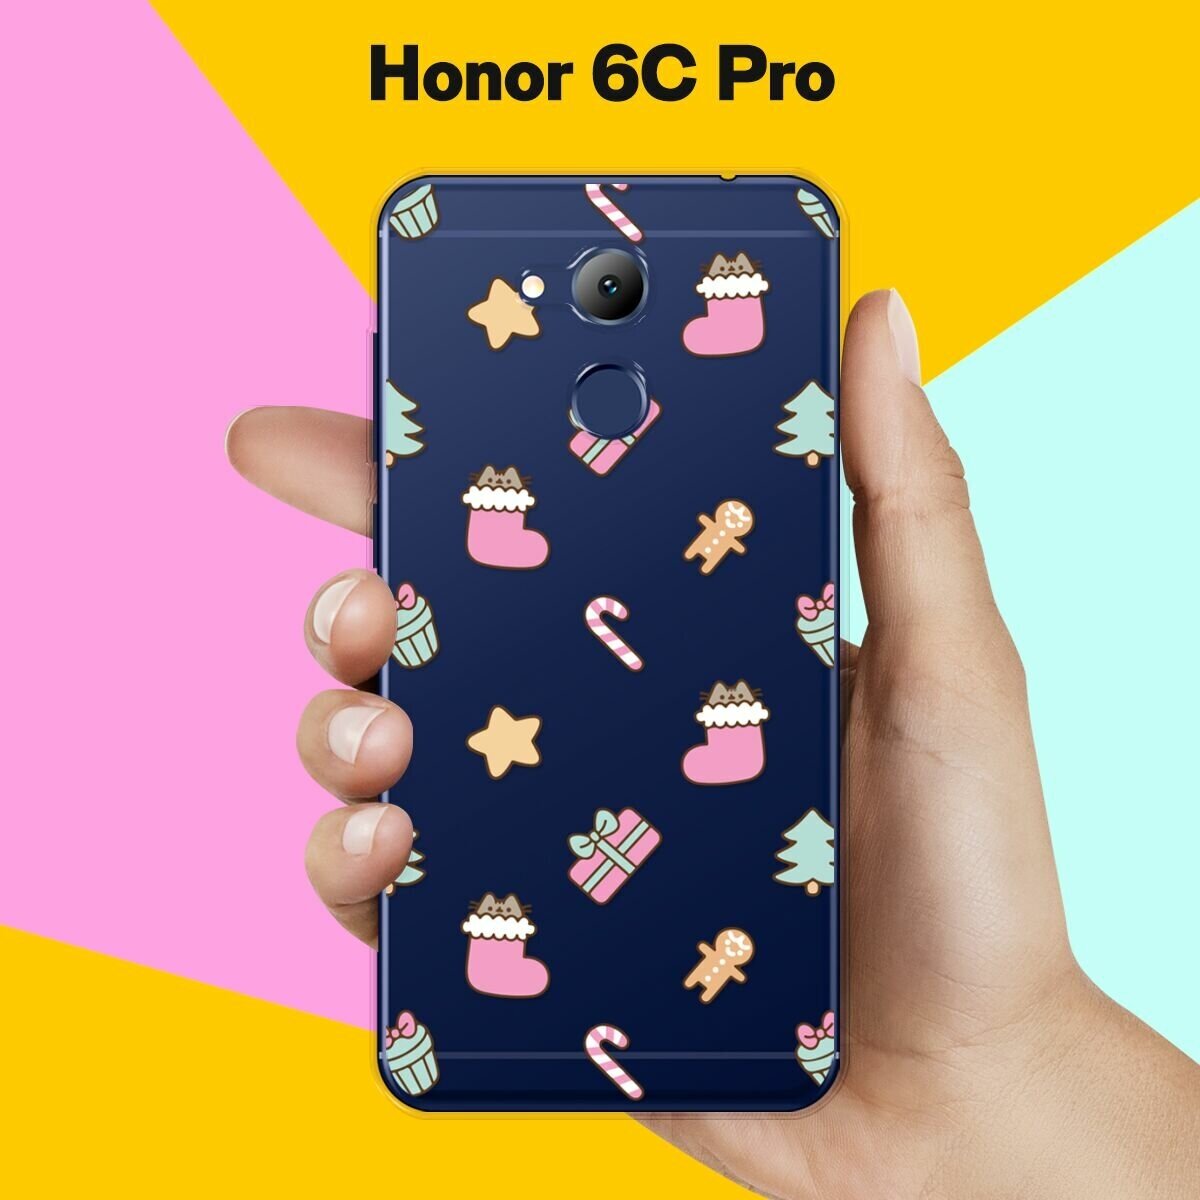 Силиконовый чехол на Honor 6C Pro Узор новогодний / для Хонор 6Ц Про